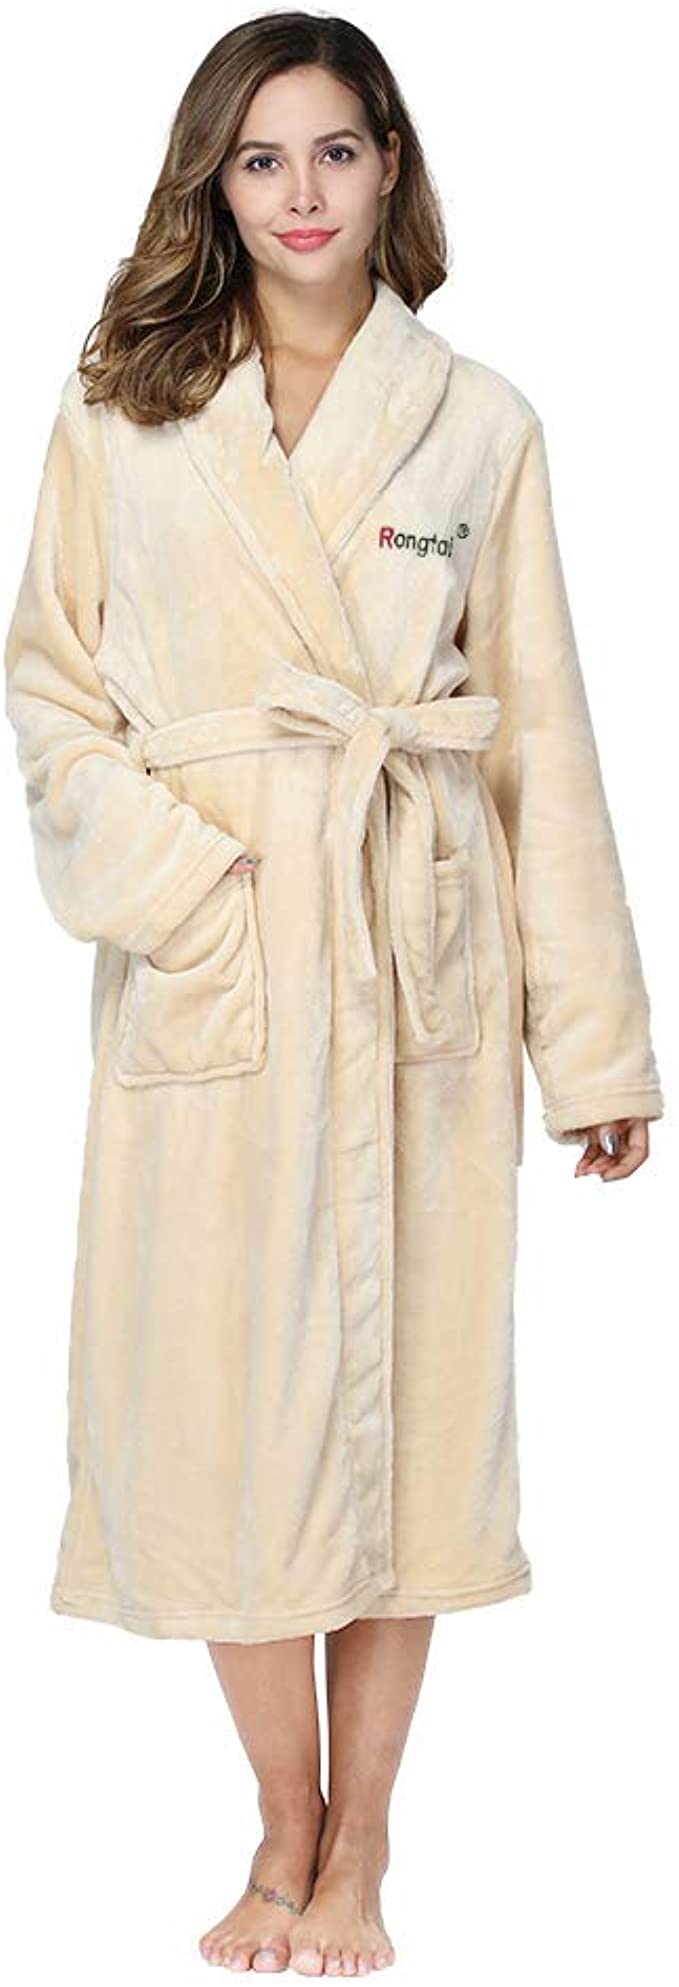 RONGTAI Fleece Robe for Women Plush Soft Warm Long Bathrobe with Pockets